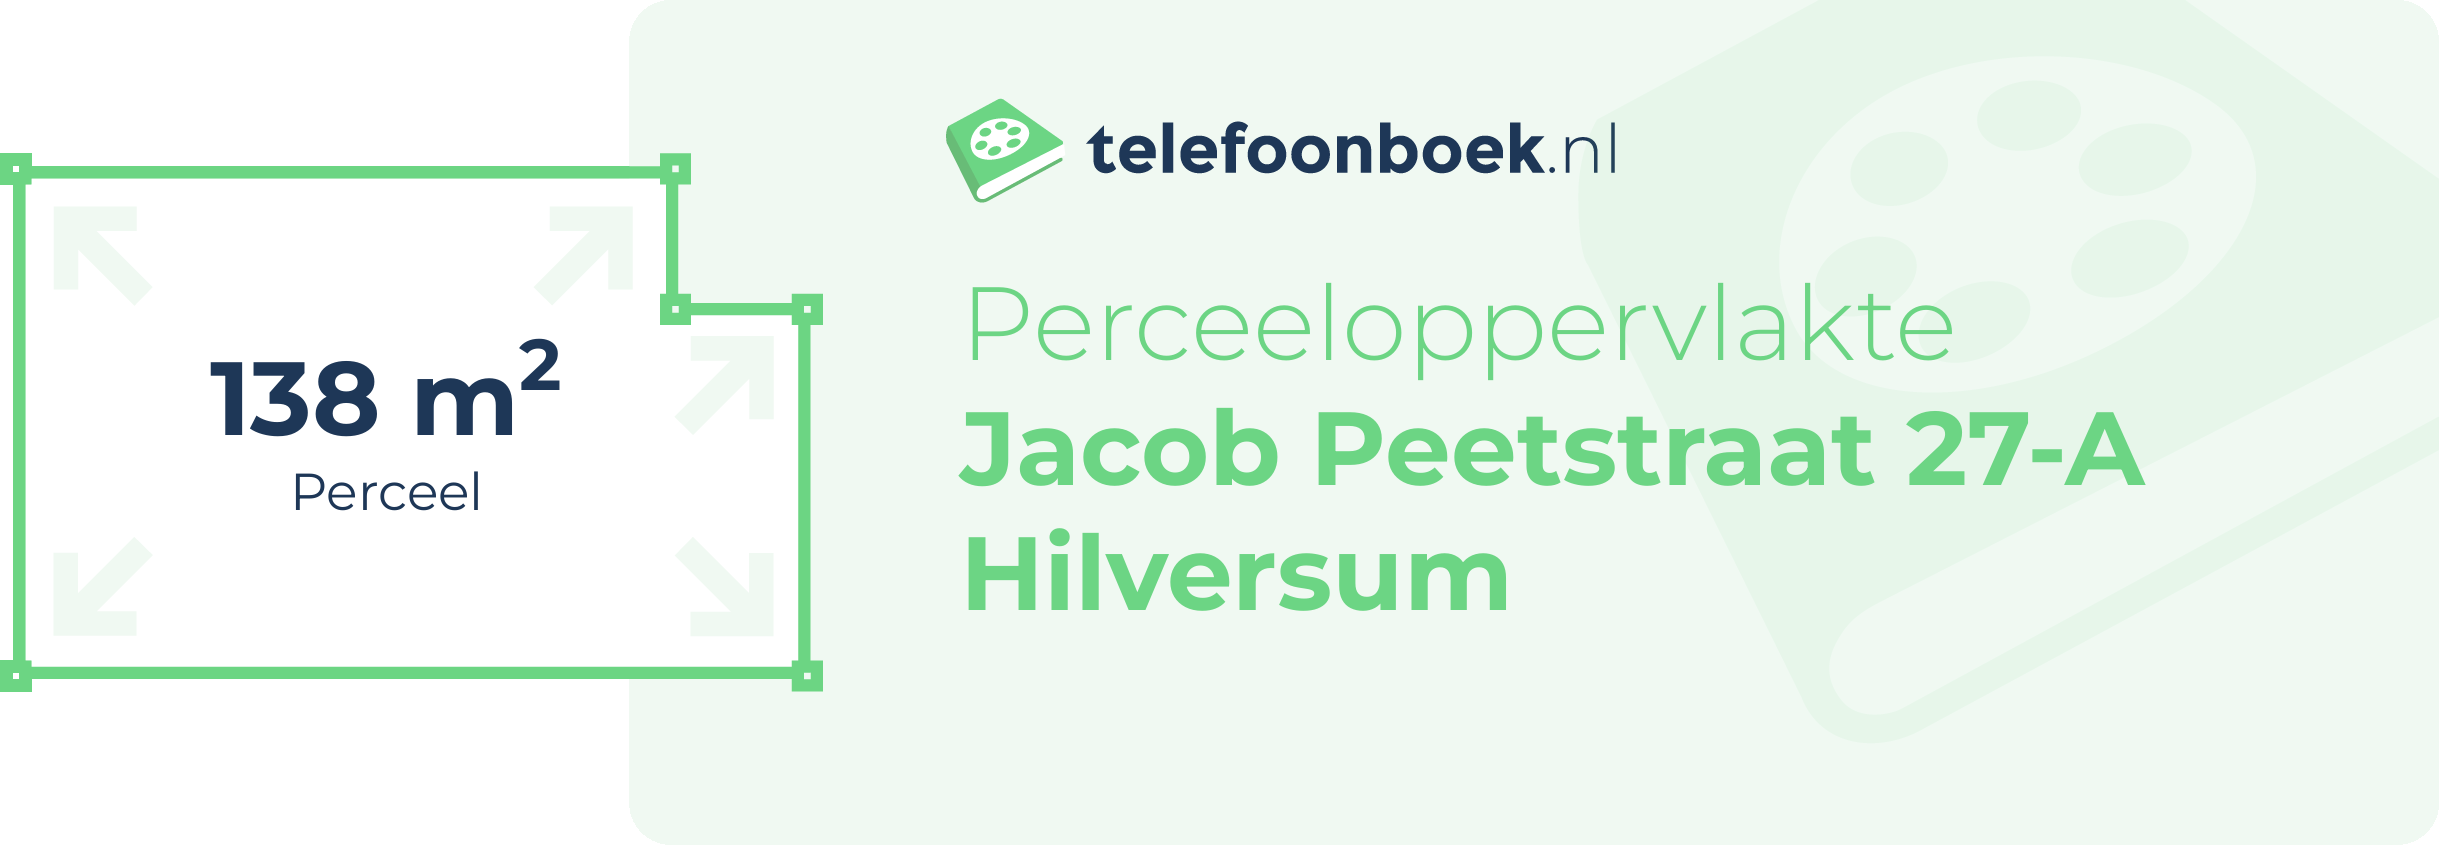 Perceeloppervlakte Jacob Peetstraat 27-A Hilversum